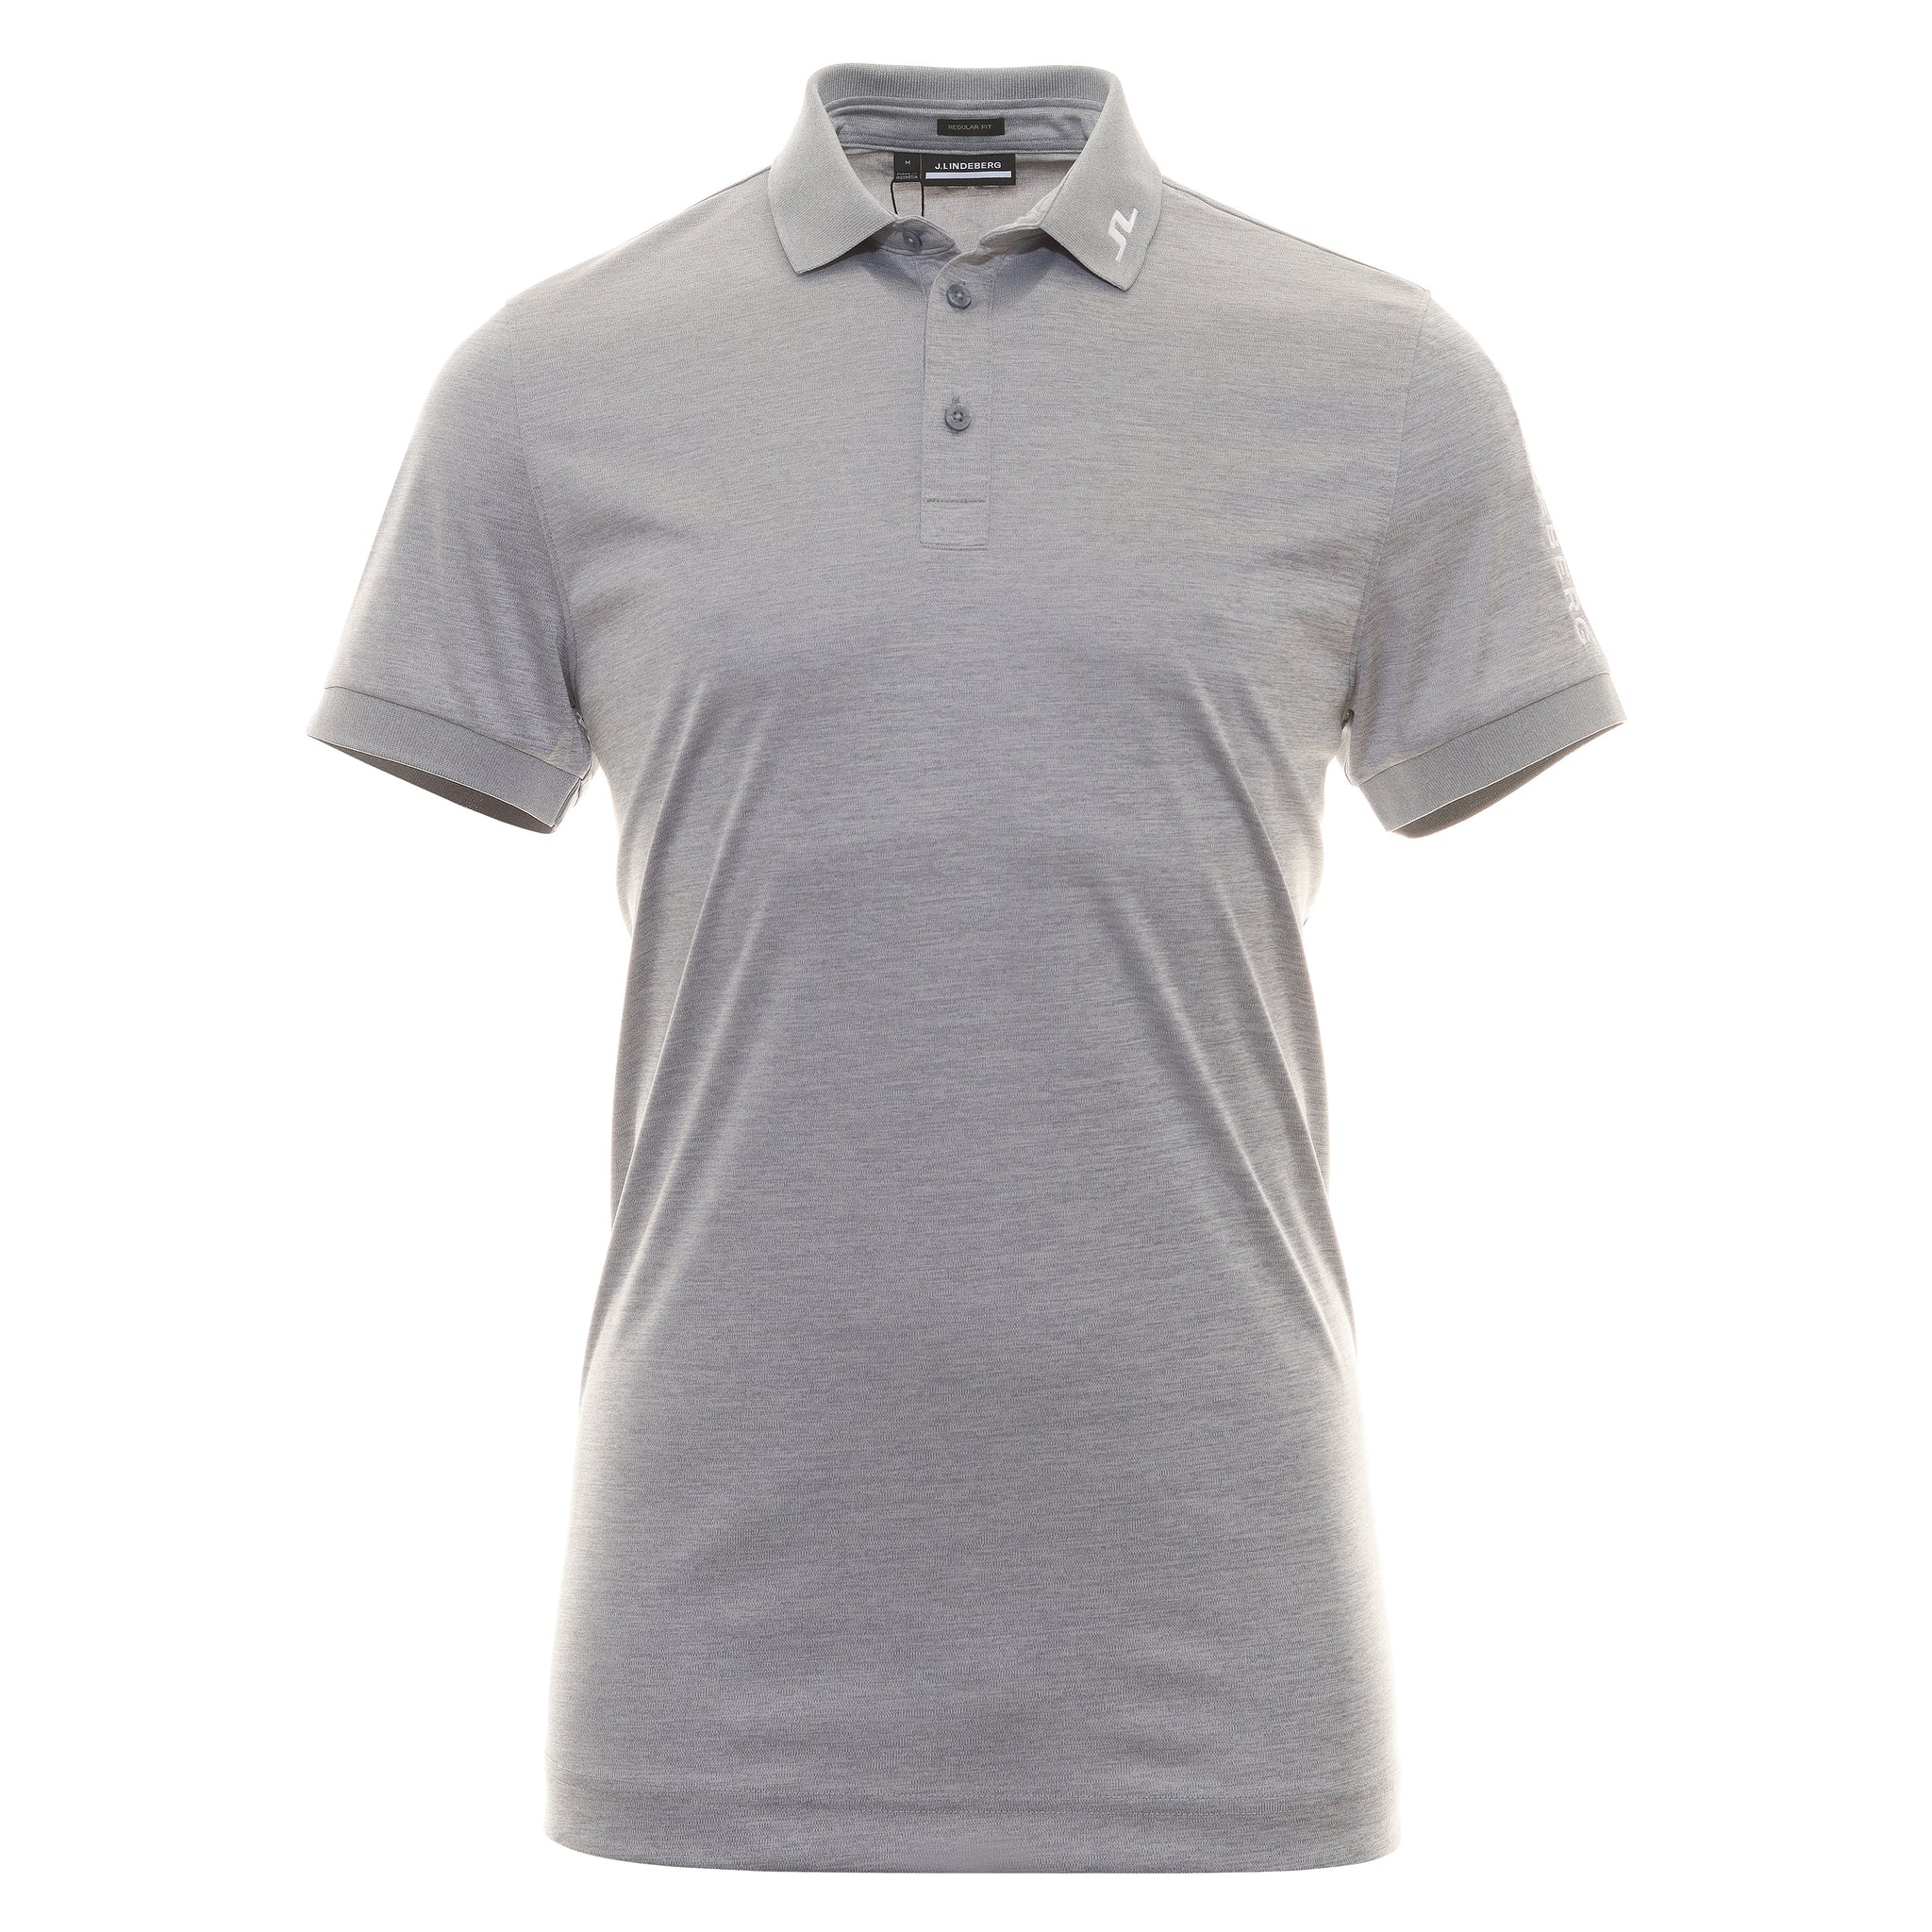 J.Lindeberg Golf Tour Tech Polo Shirt GMJT08836 Grey Melange 9363 ...